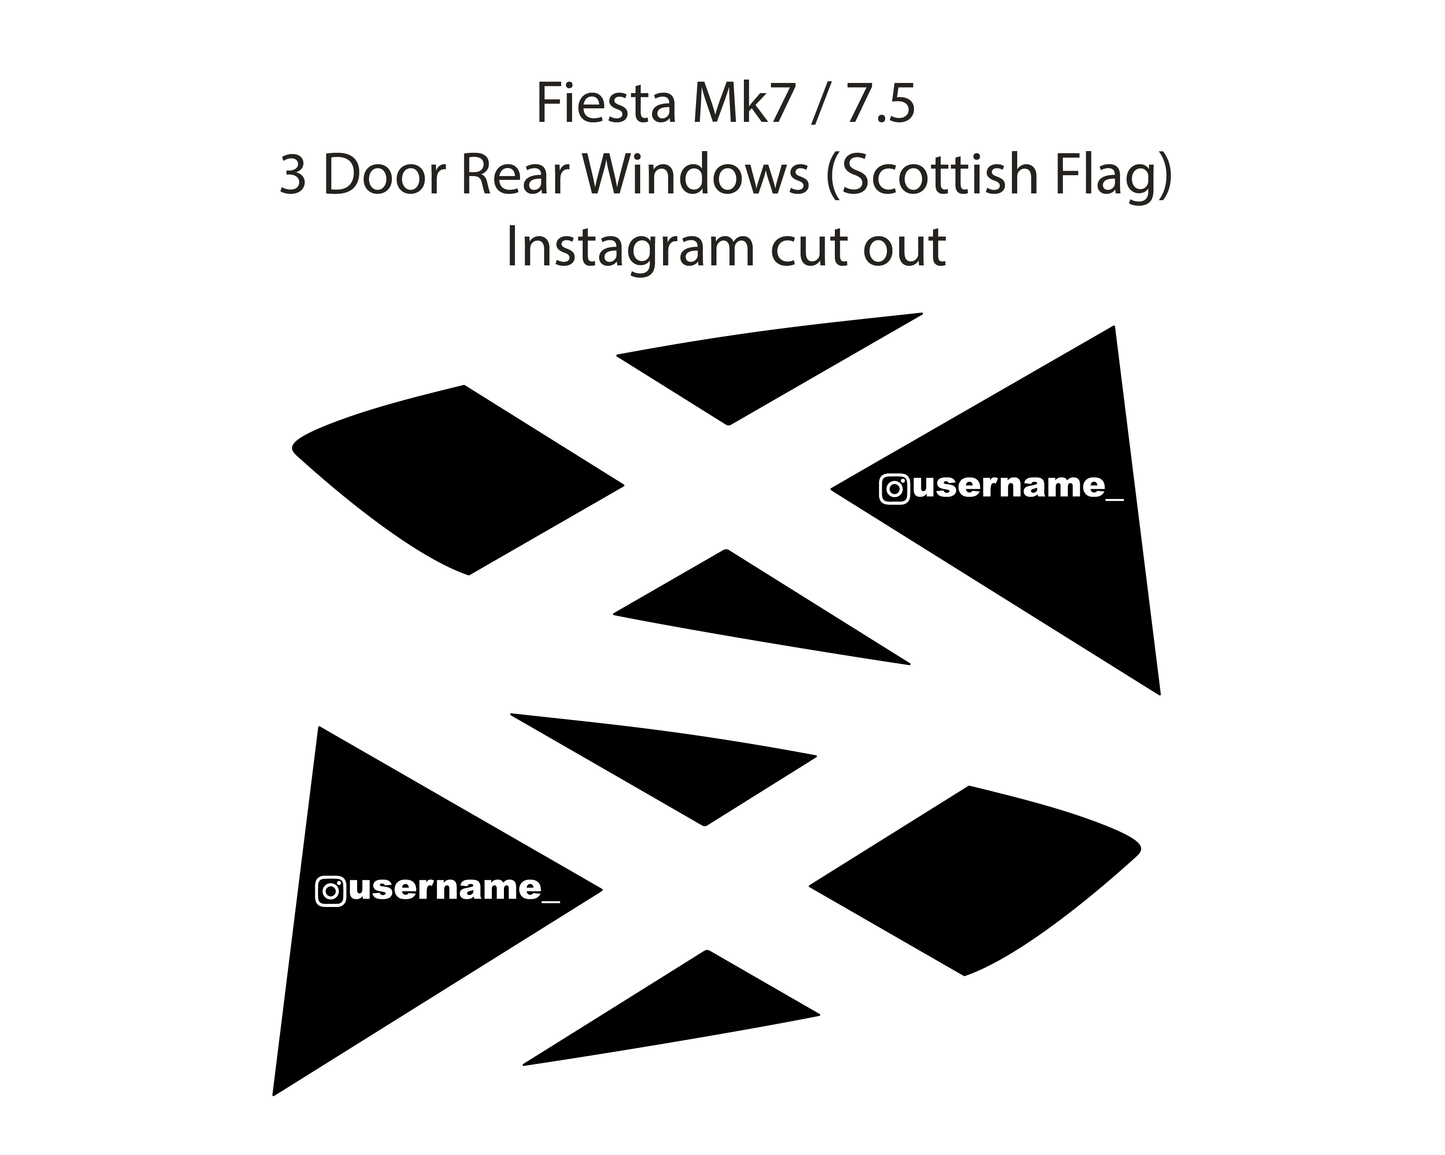 Mk7 / 7.5 Fiesta Scotland Flag Window Vinyl Decal Set